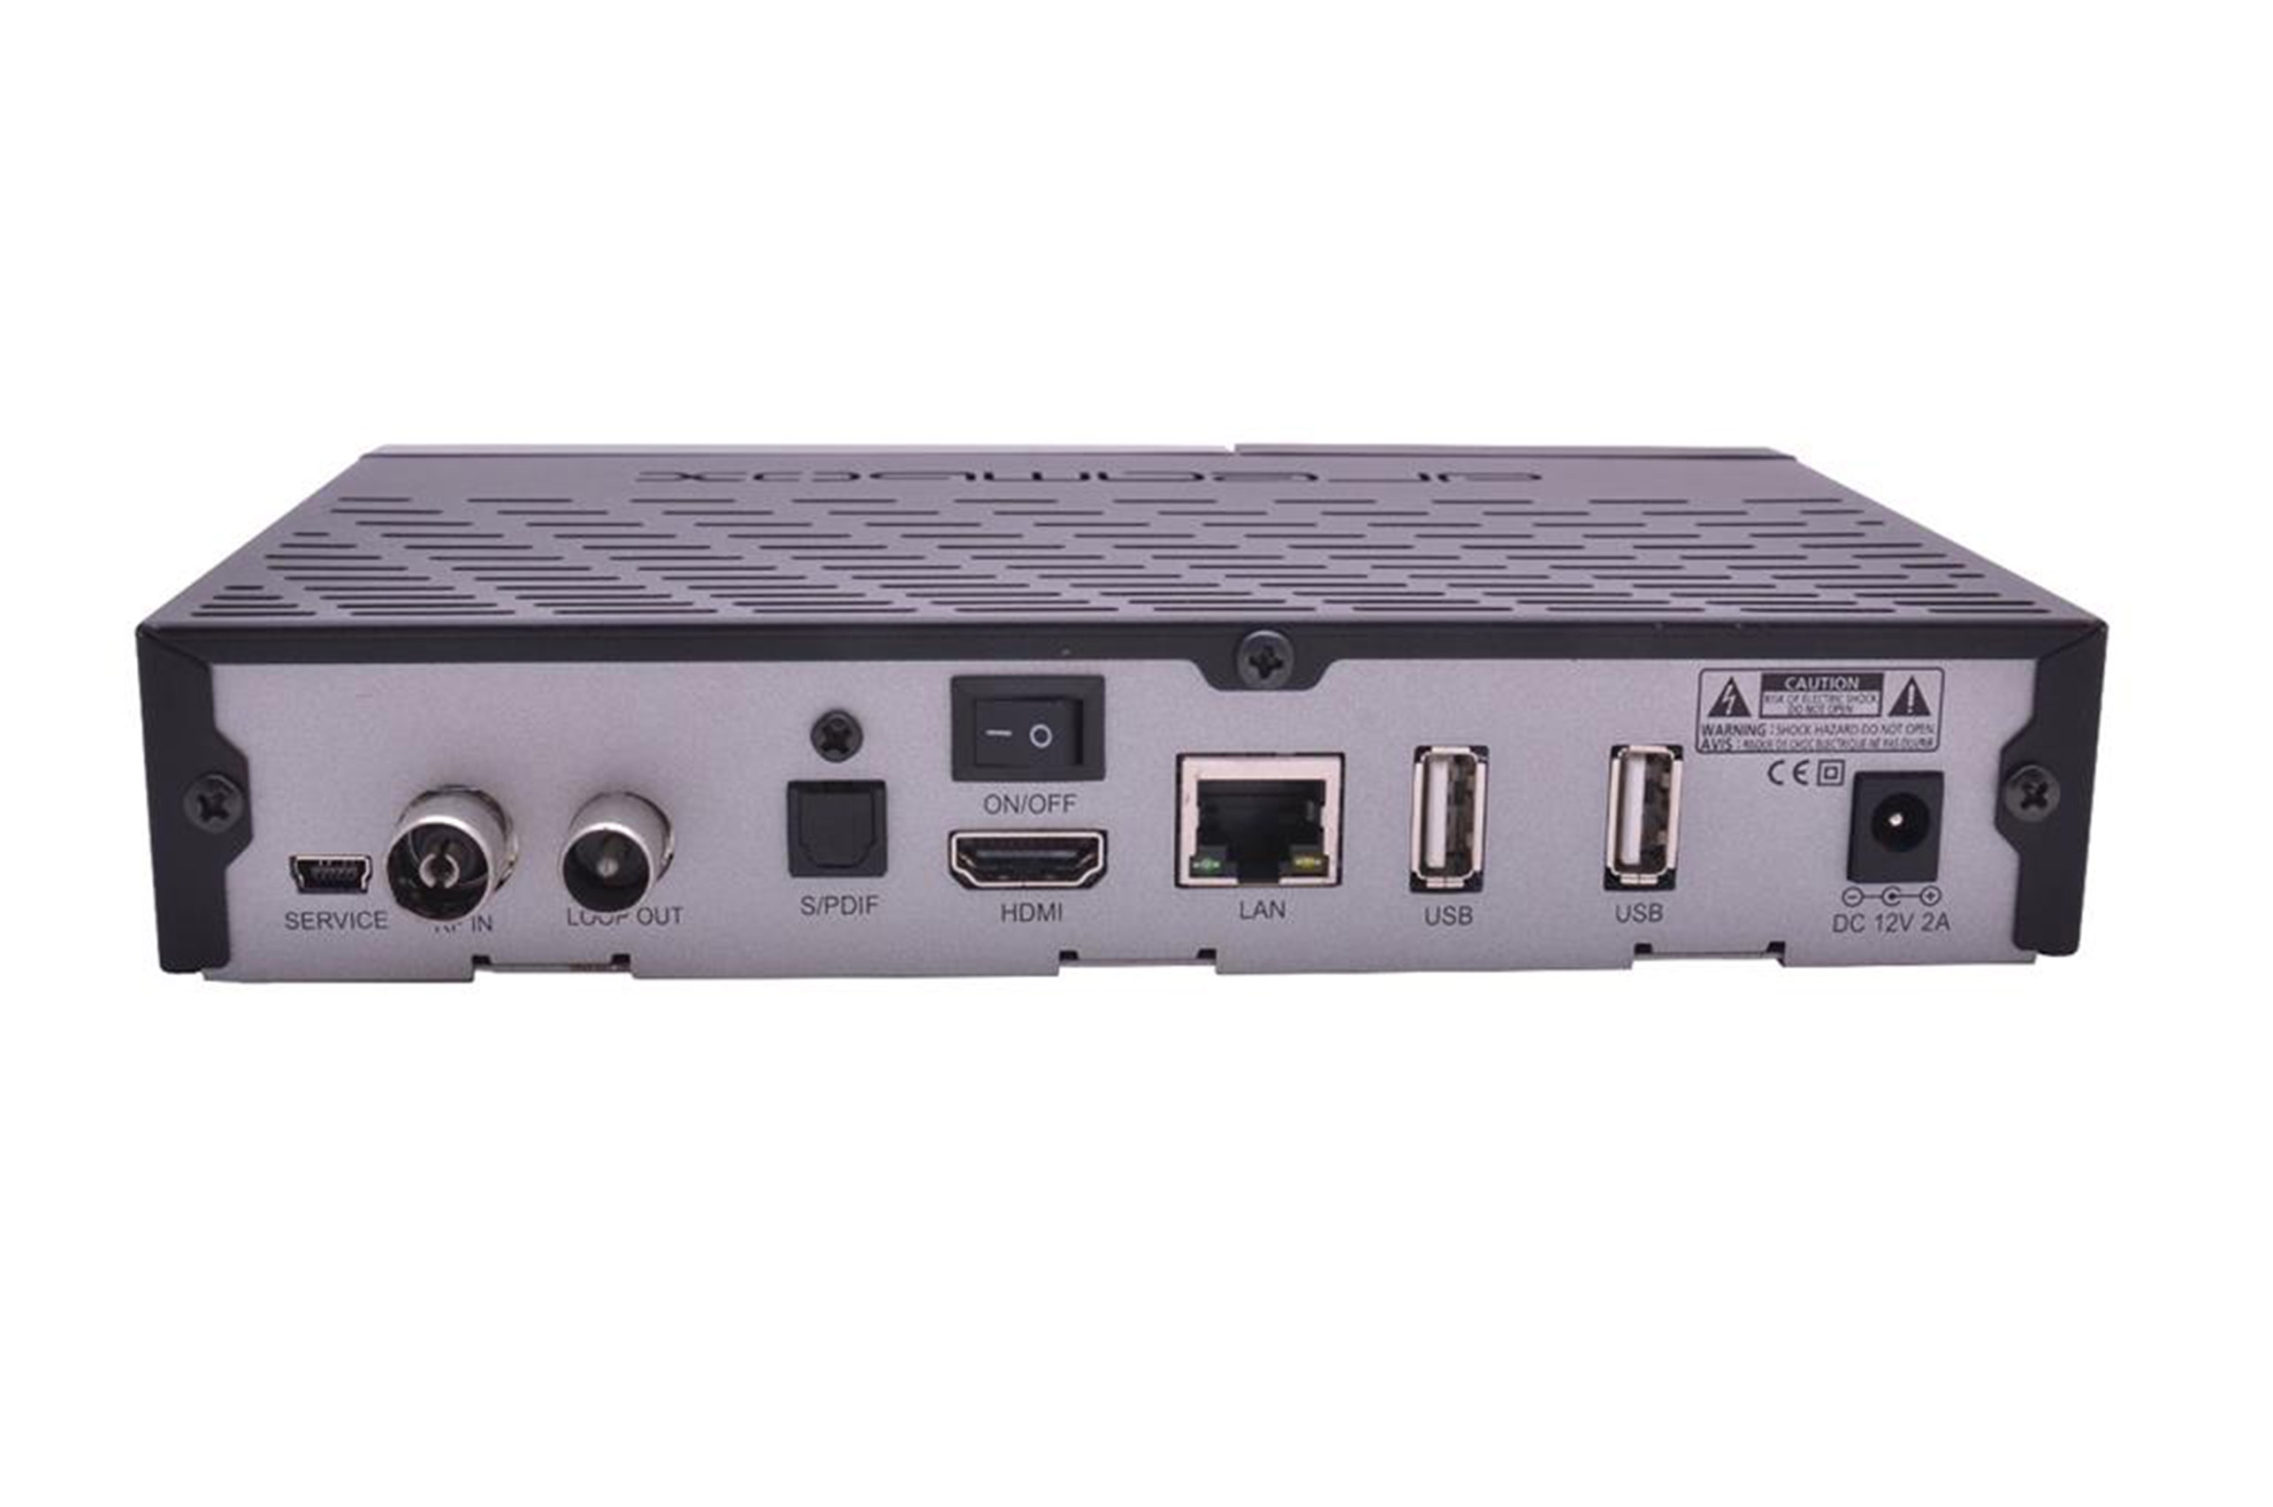 Dreambox DM 520 HD 1x DVB-CT2 Tuner E2 Linux PVR HDTV USB LAN Receiver